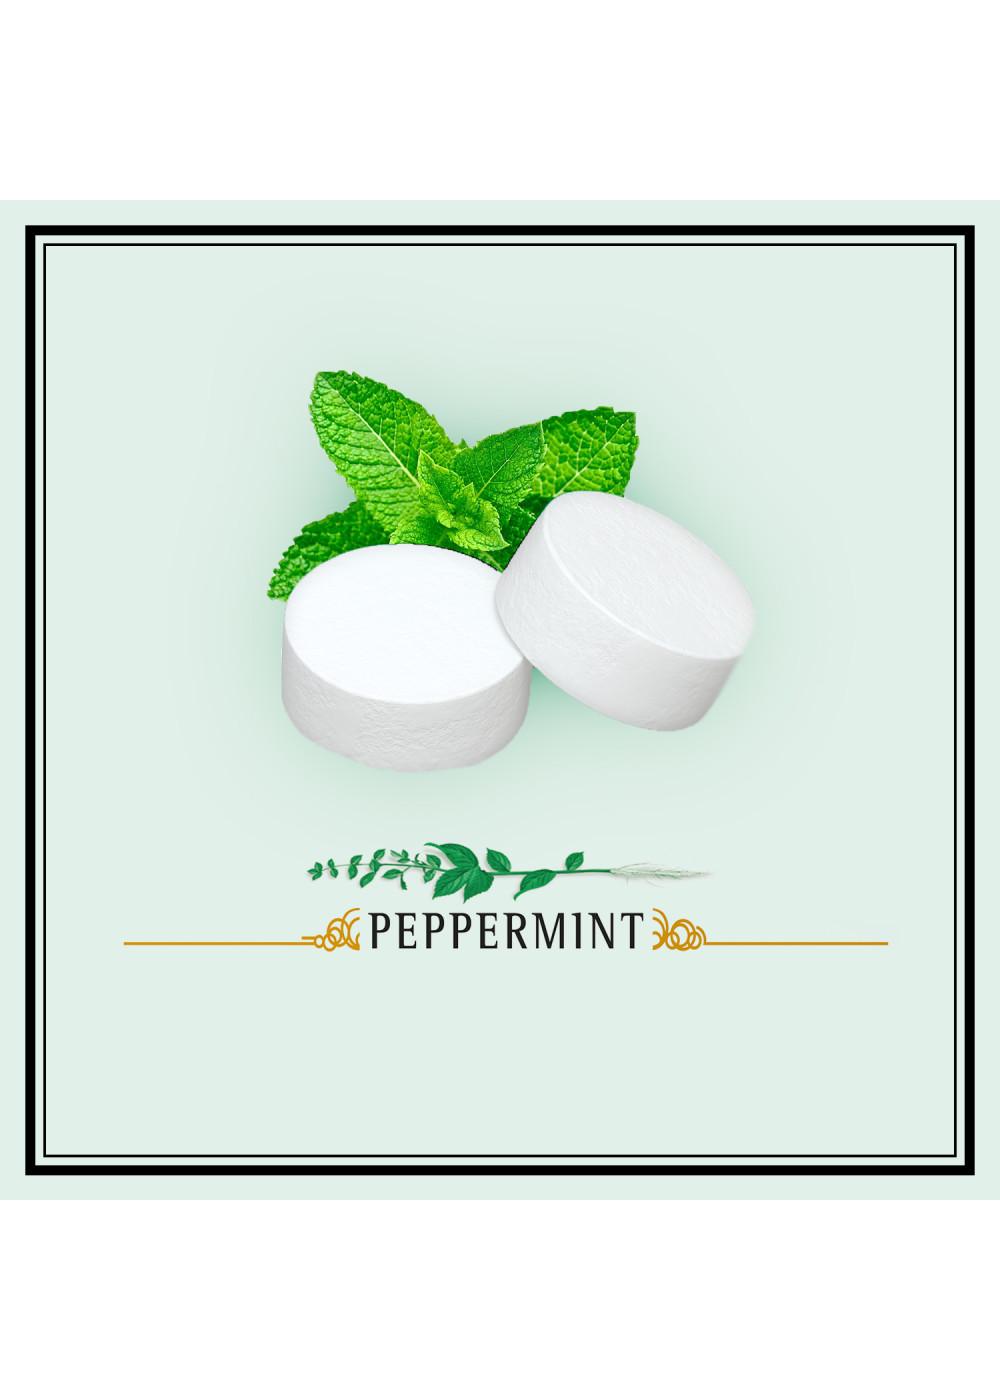 Altoids Classic Peppermint Breath Mints; image 2 of 2